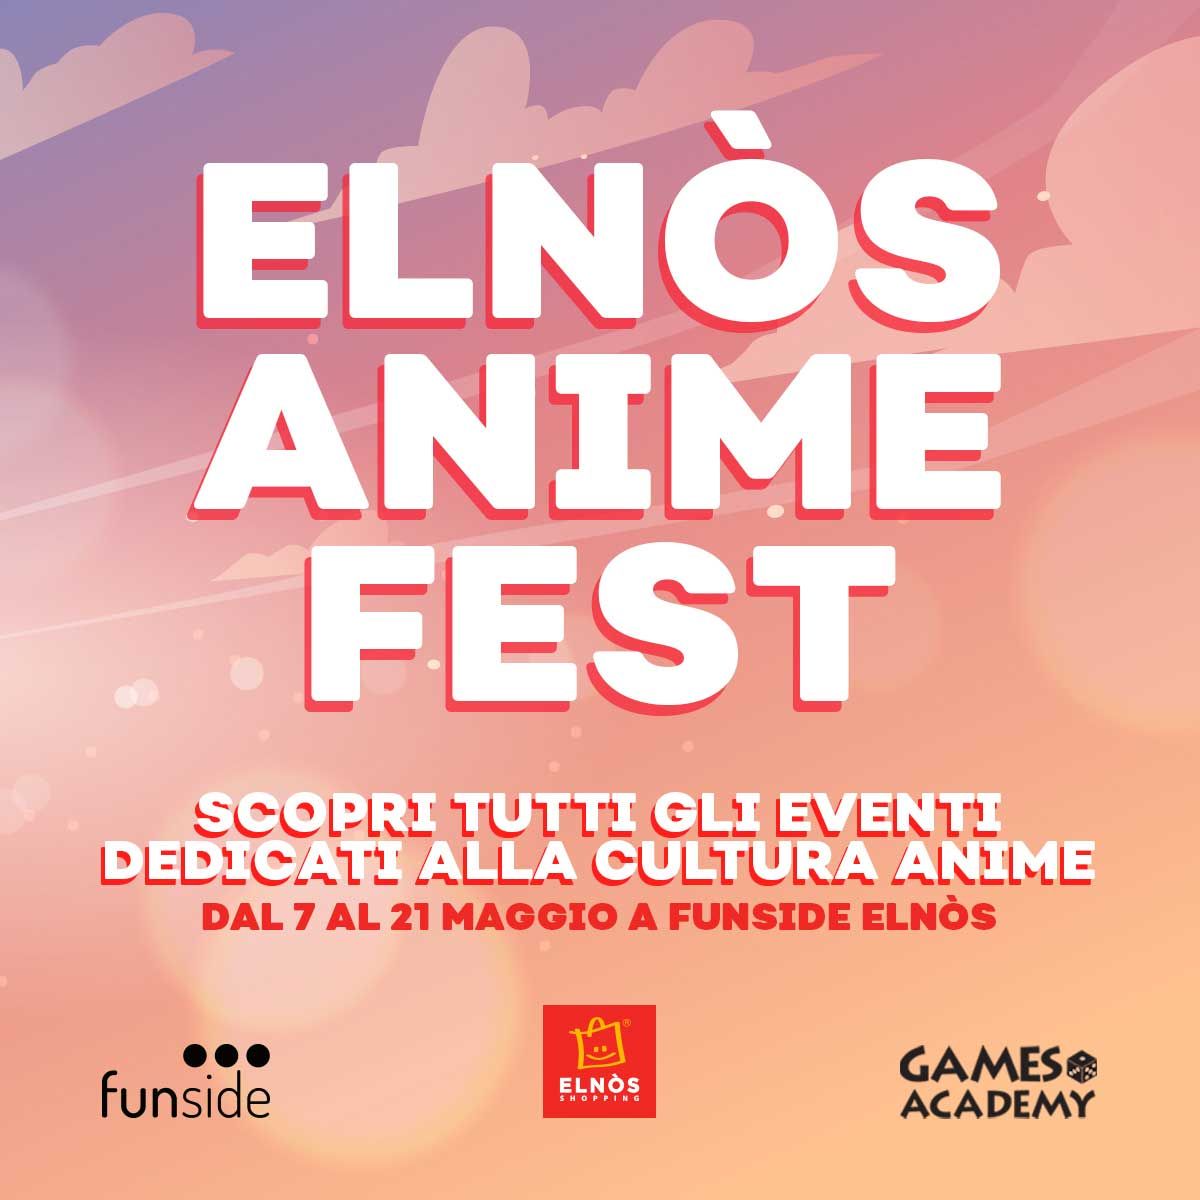 Elnos-Anime-Fest